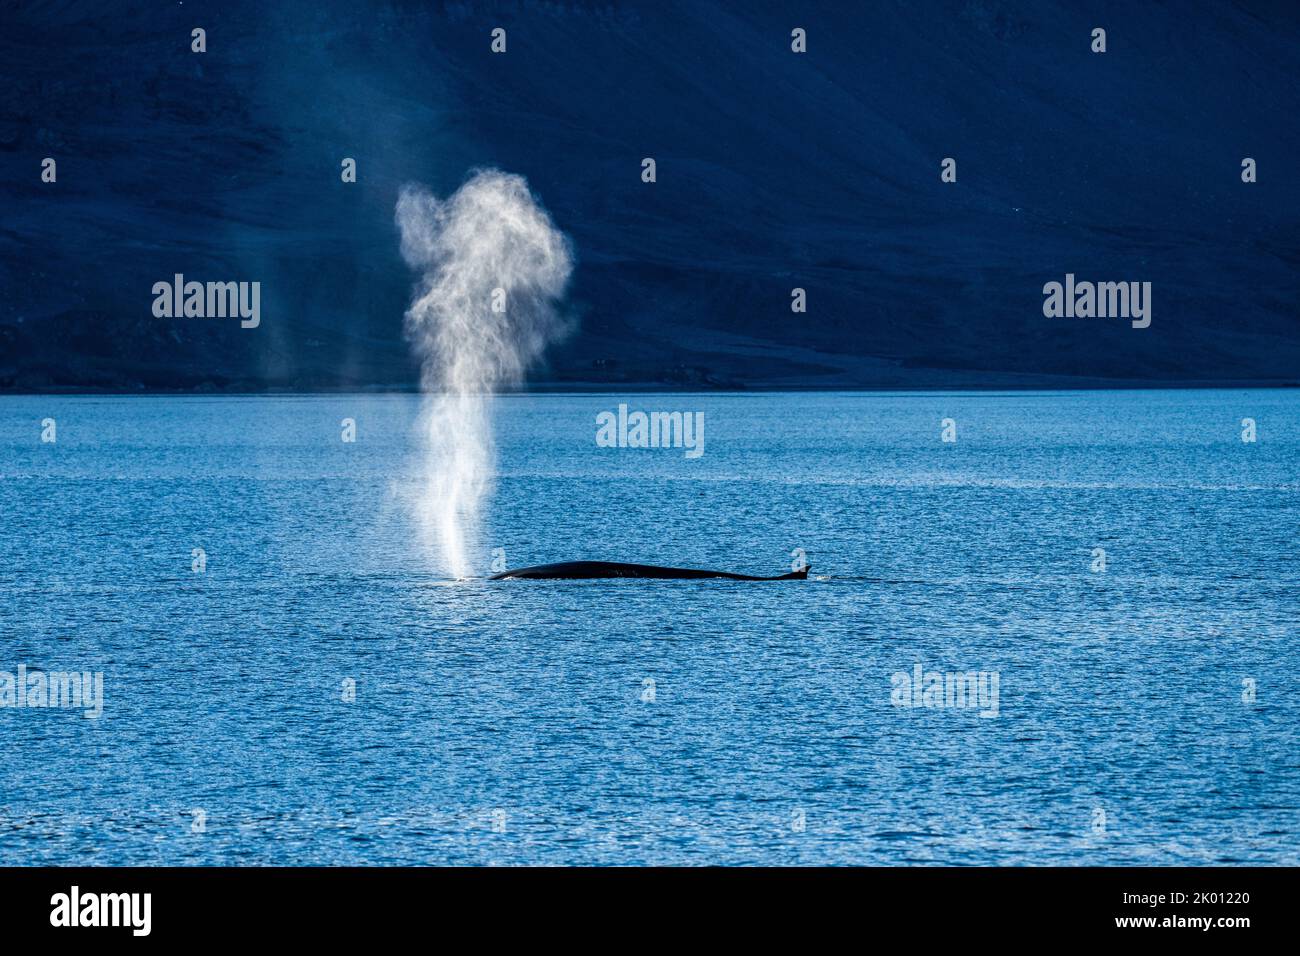 Minke whale in the north sea Spitsbergen Stock Photo